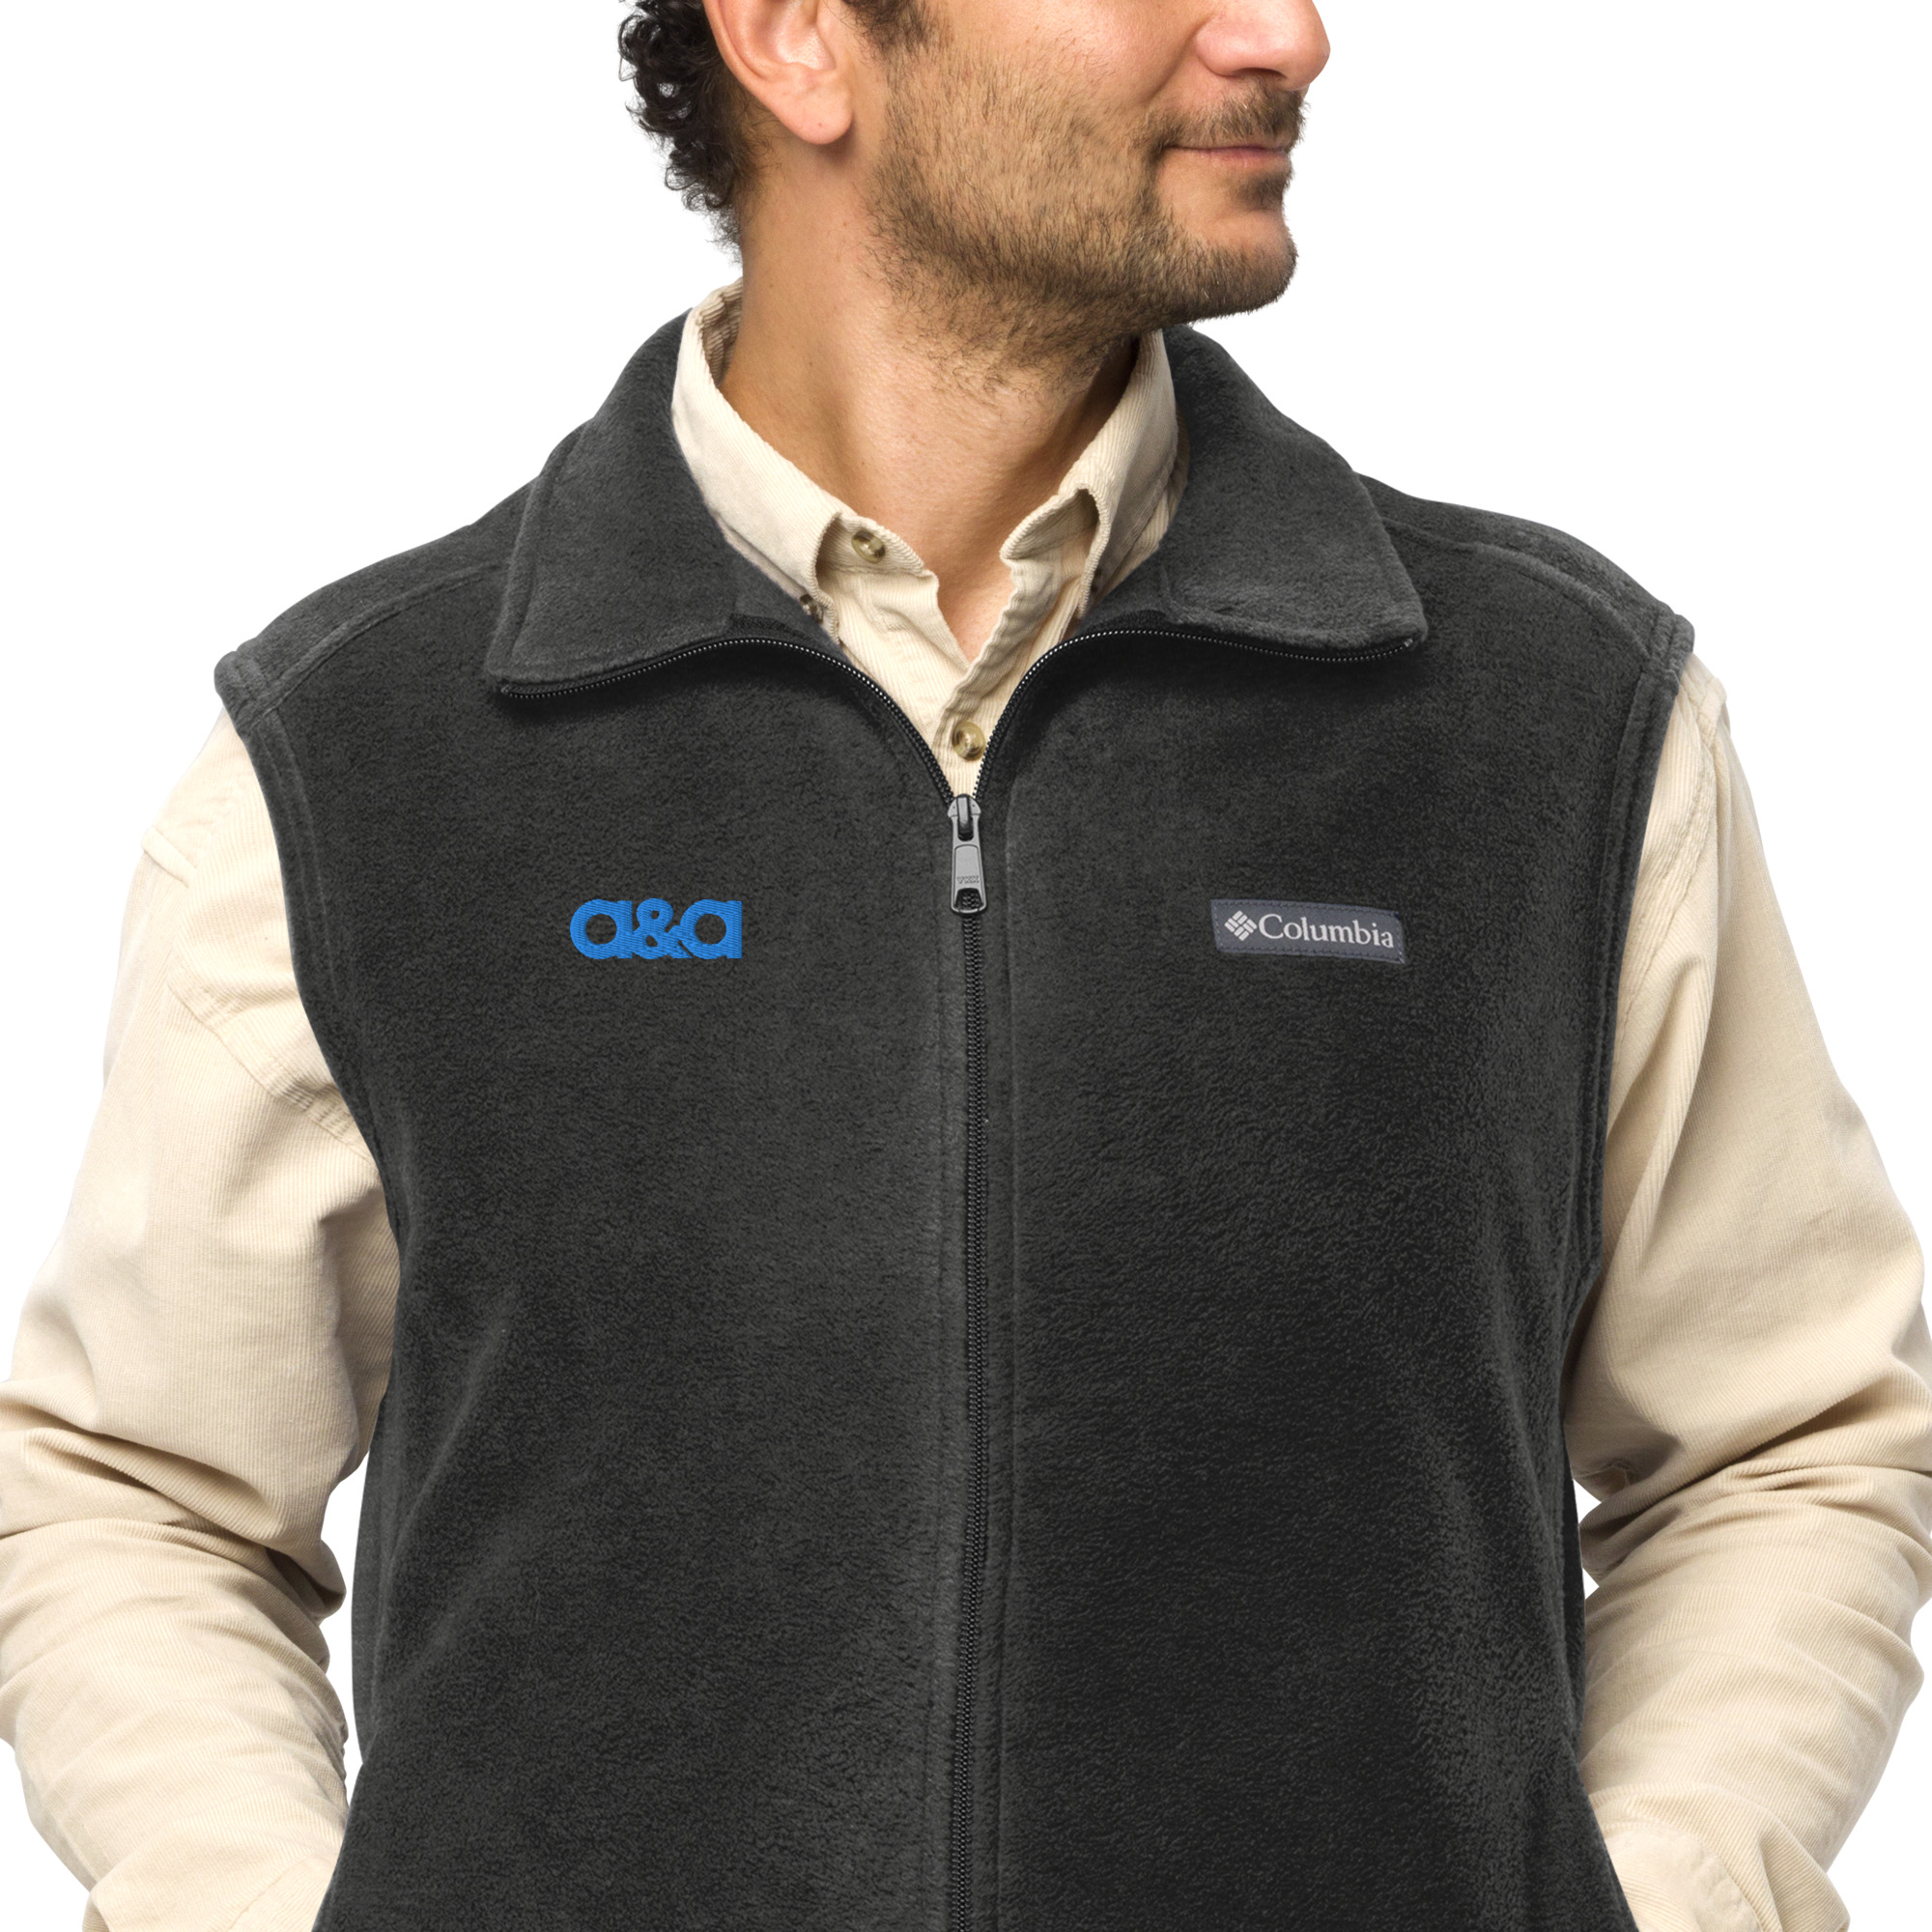 Men's Columbia Fleece Vest  A&A Elevated Facility Solutions